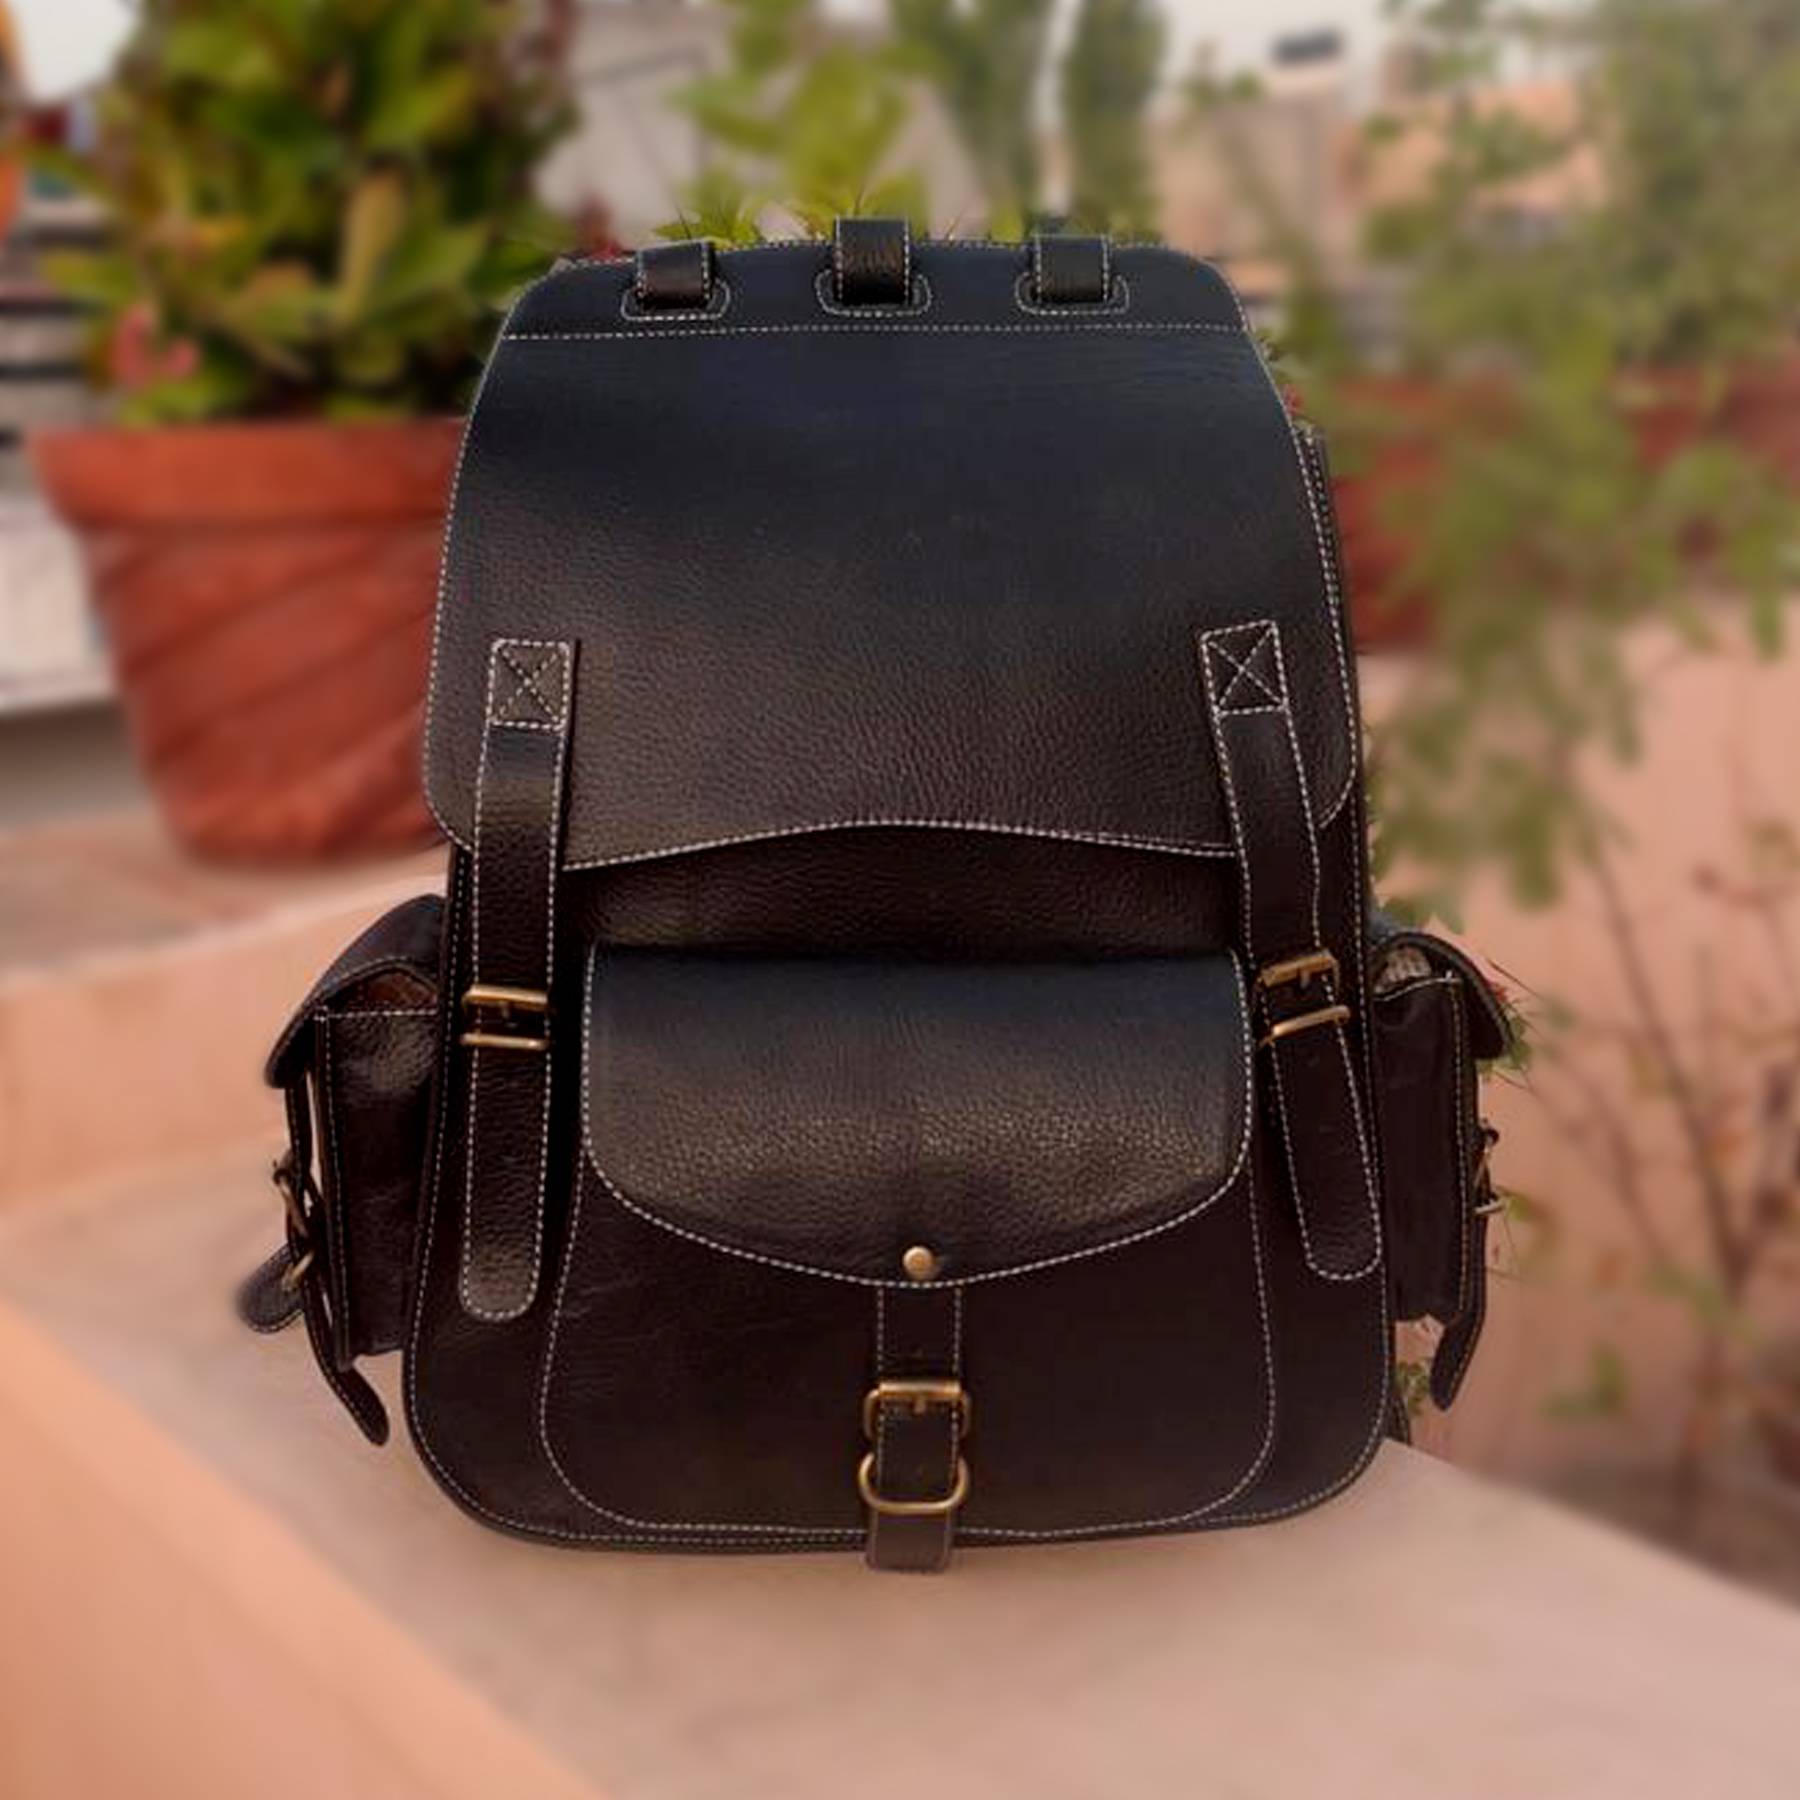 Sobczuk leather goods Leather Duffel Bag, Leather Travel Bag, Weekend Bag,  India | Ubuy